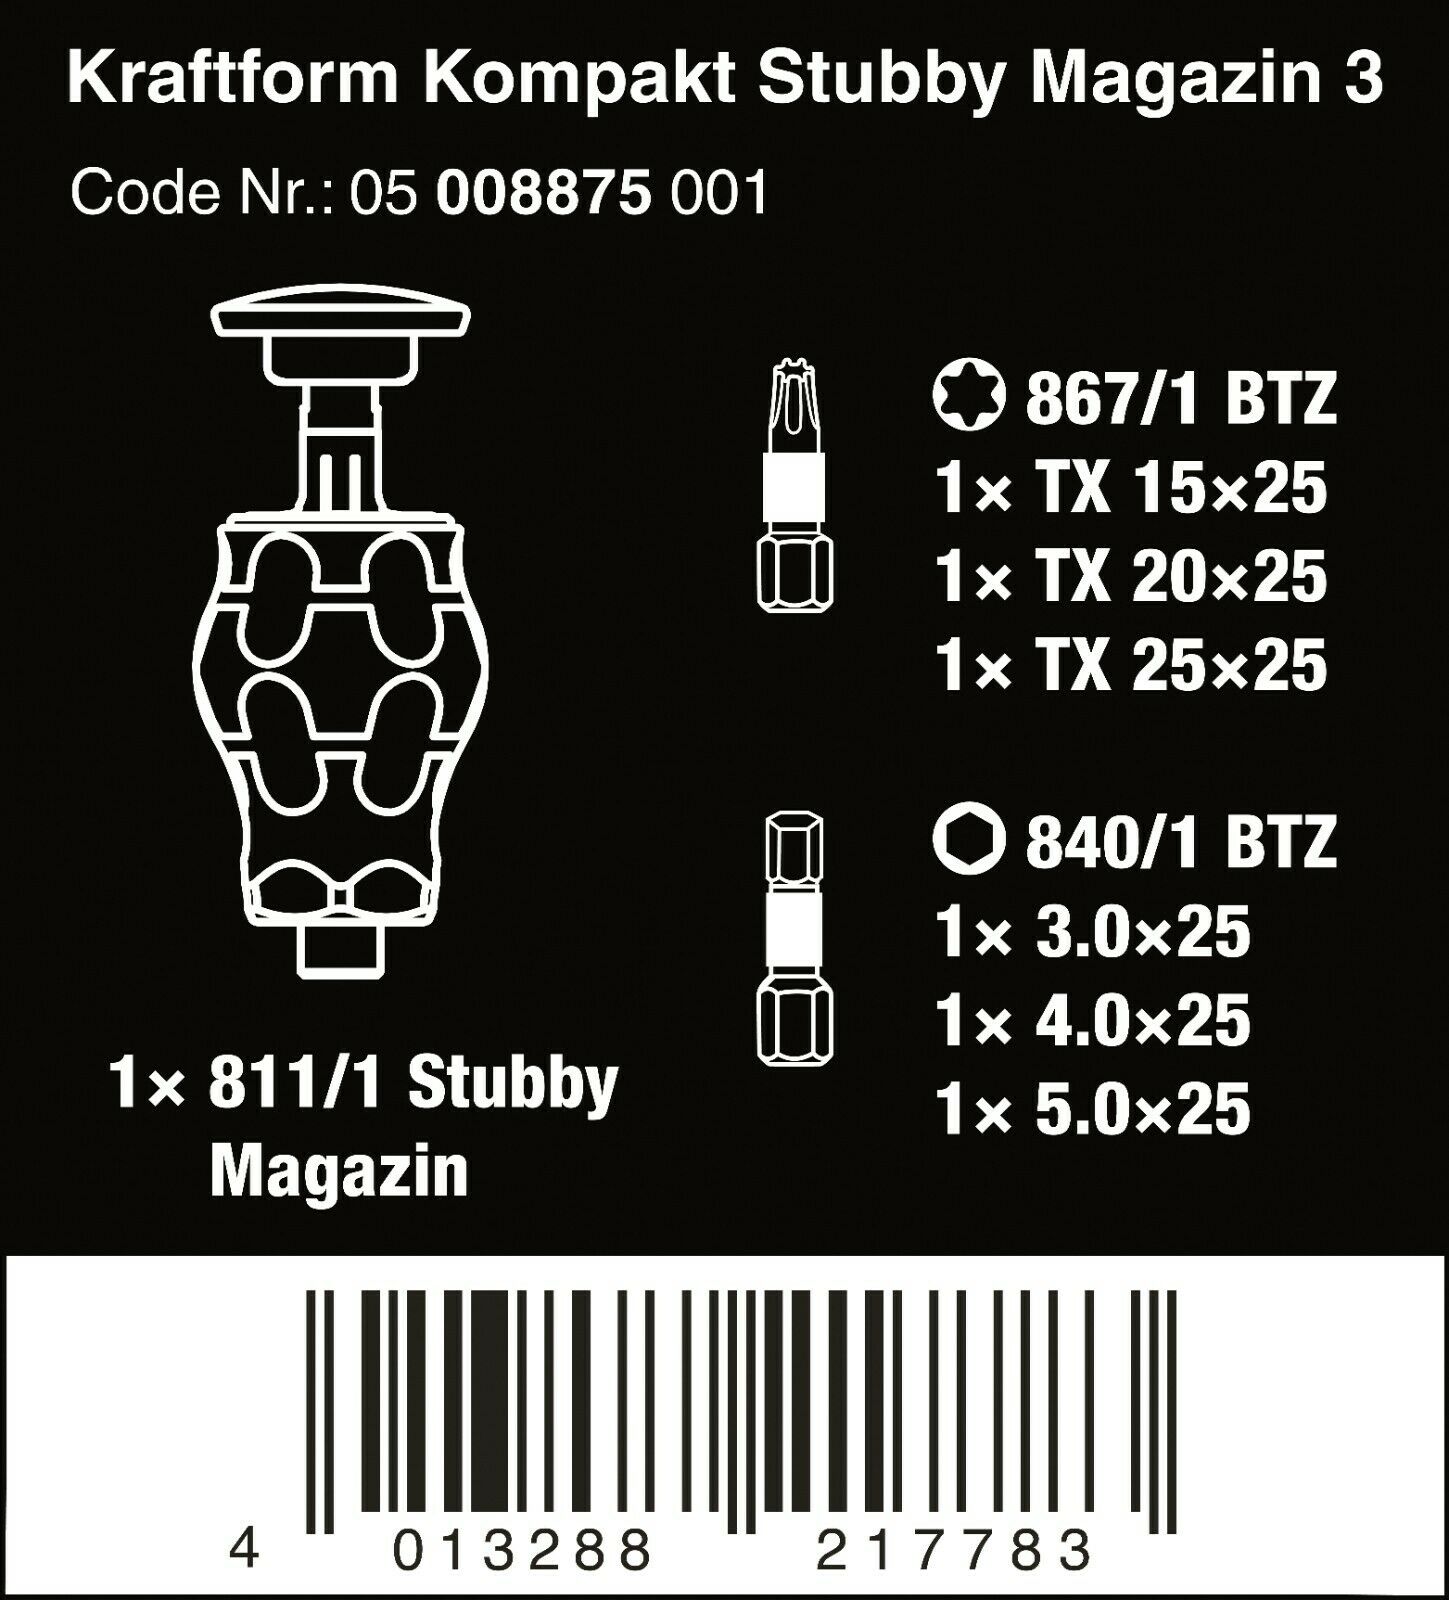 wera kraftform kompakt stubby magazine 3 screwdriver set 05008875001